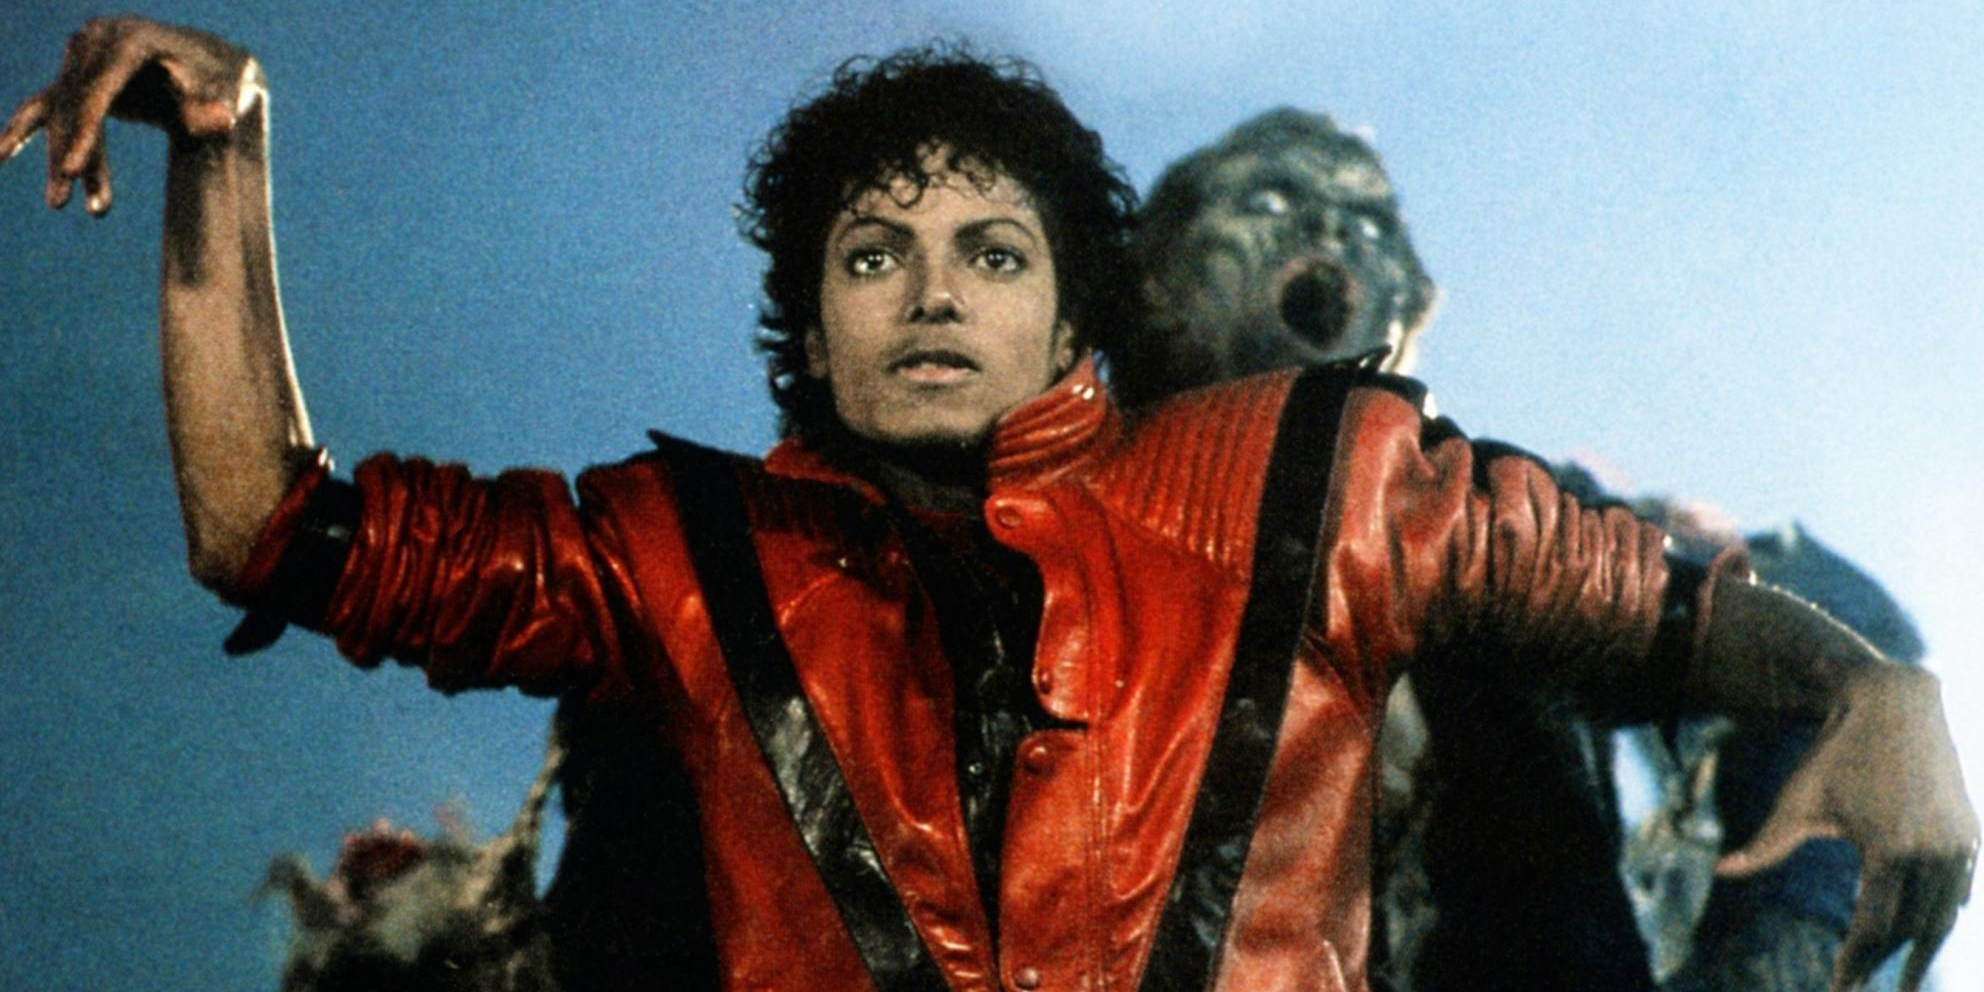 Download Michael Jackson's Thriller album for free (Reg. $10)